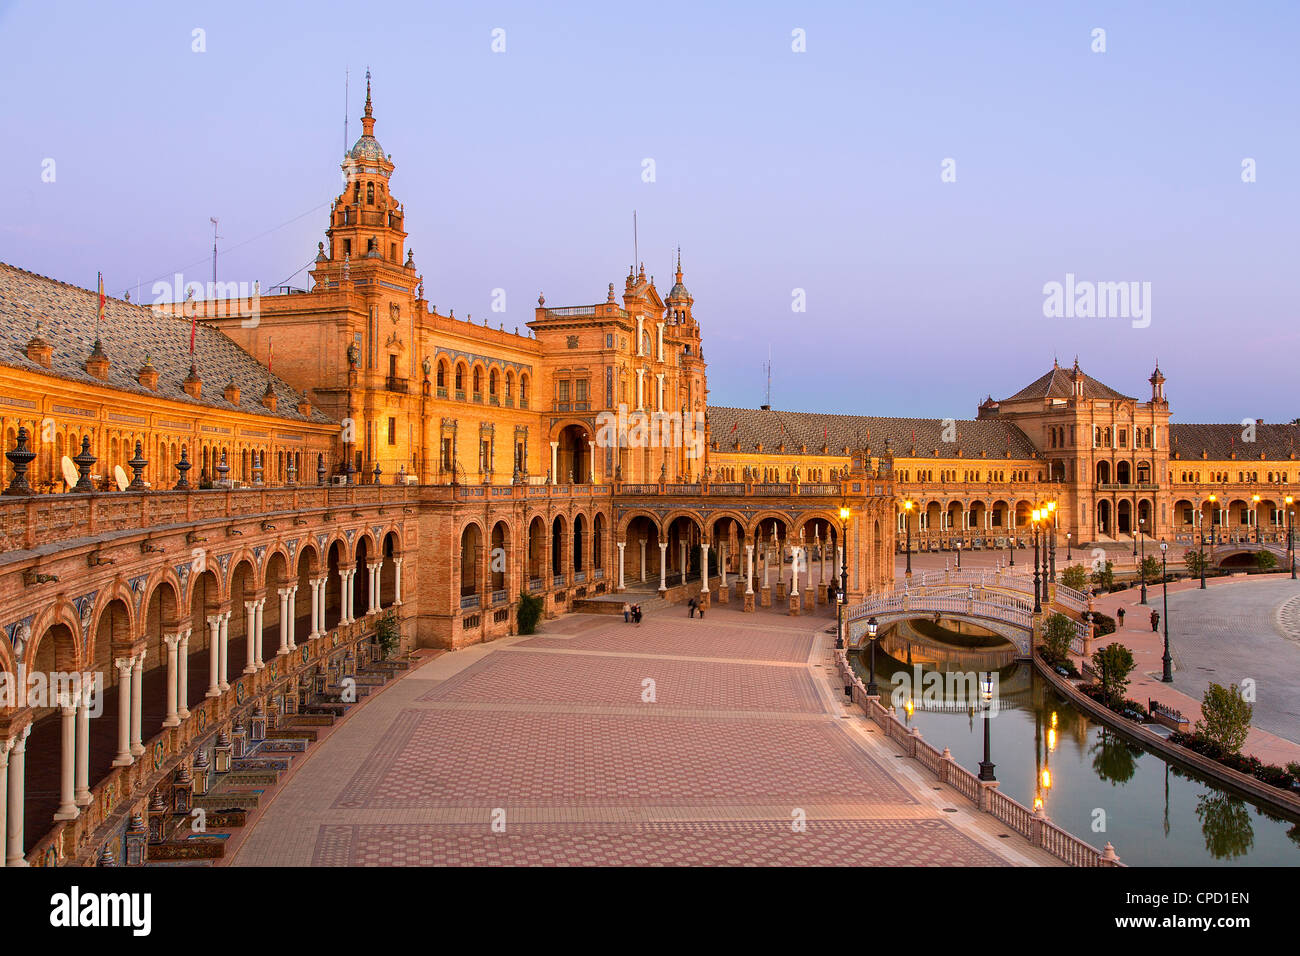 Spain, Andalusia, Seville, Plaza de Espana at Dusk Stock Photo